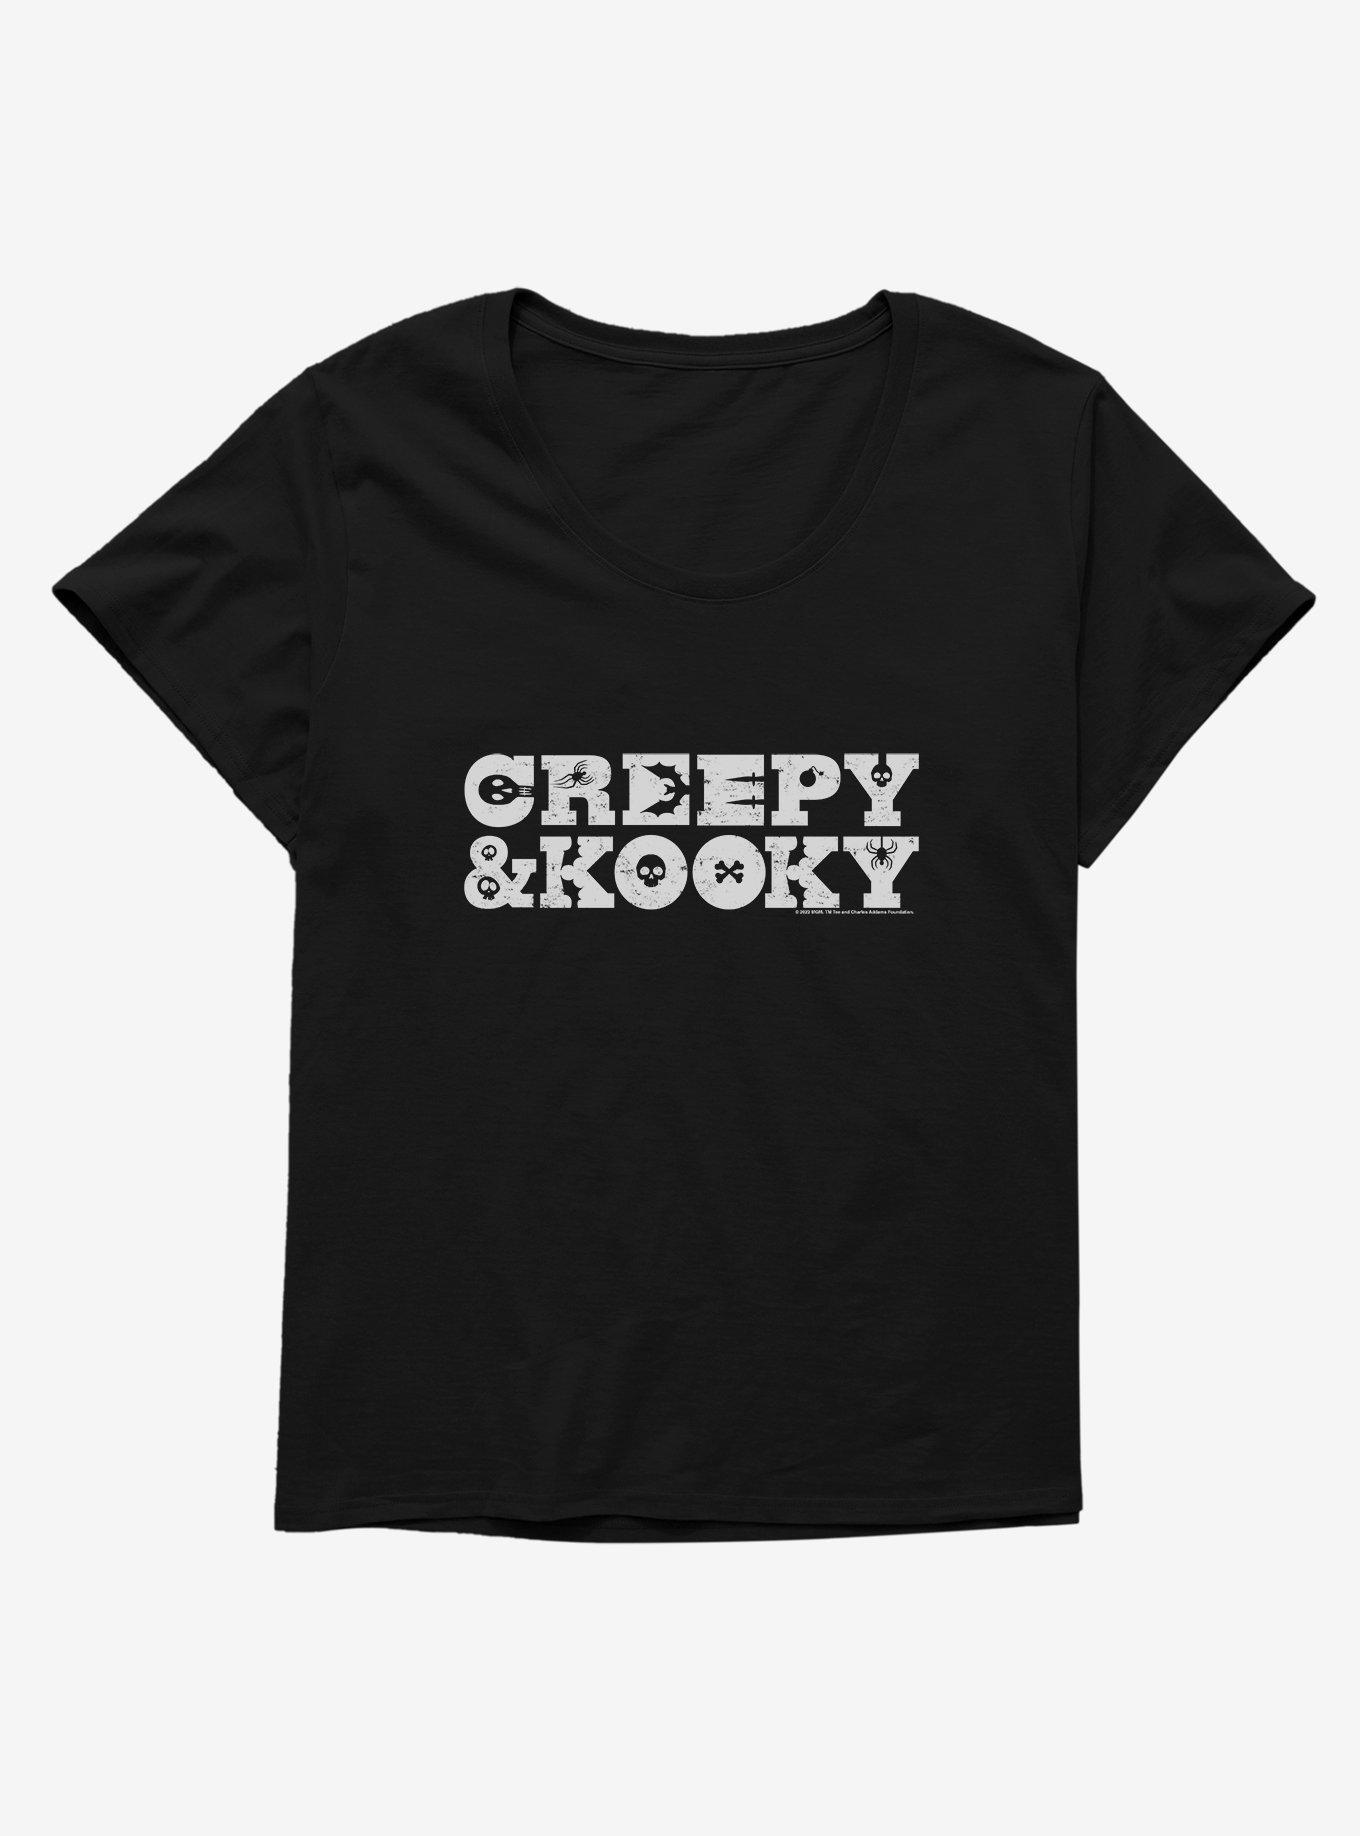 Addams Family Creepy & Kooky Girls T-Shirt Plus